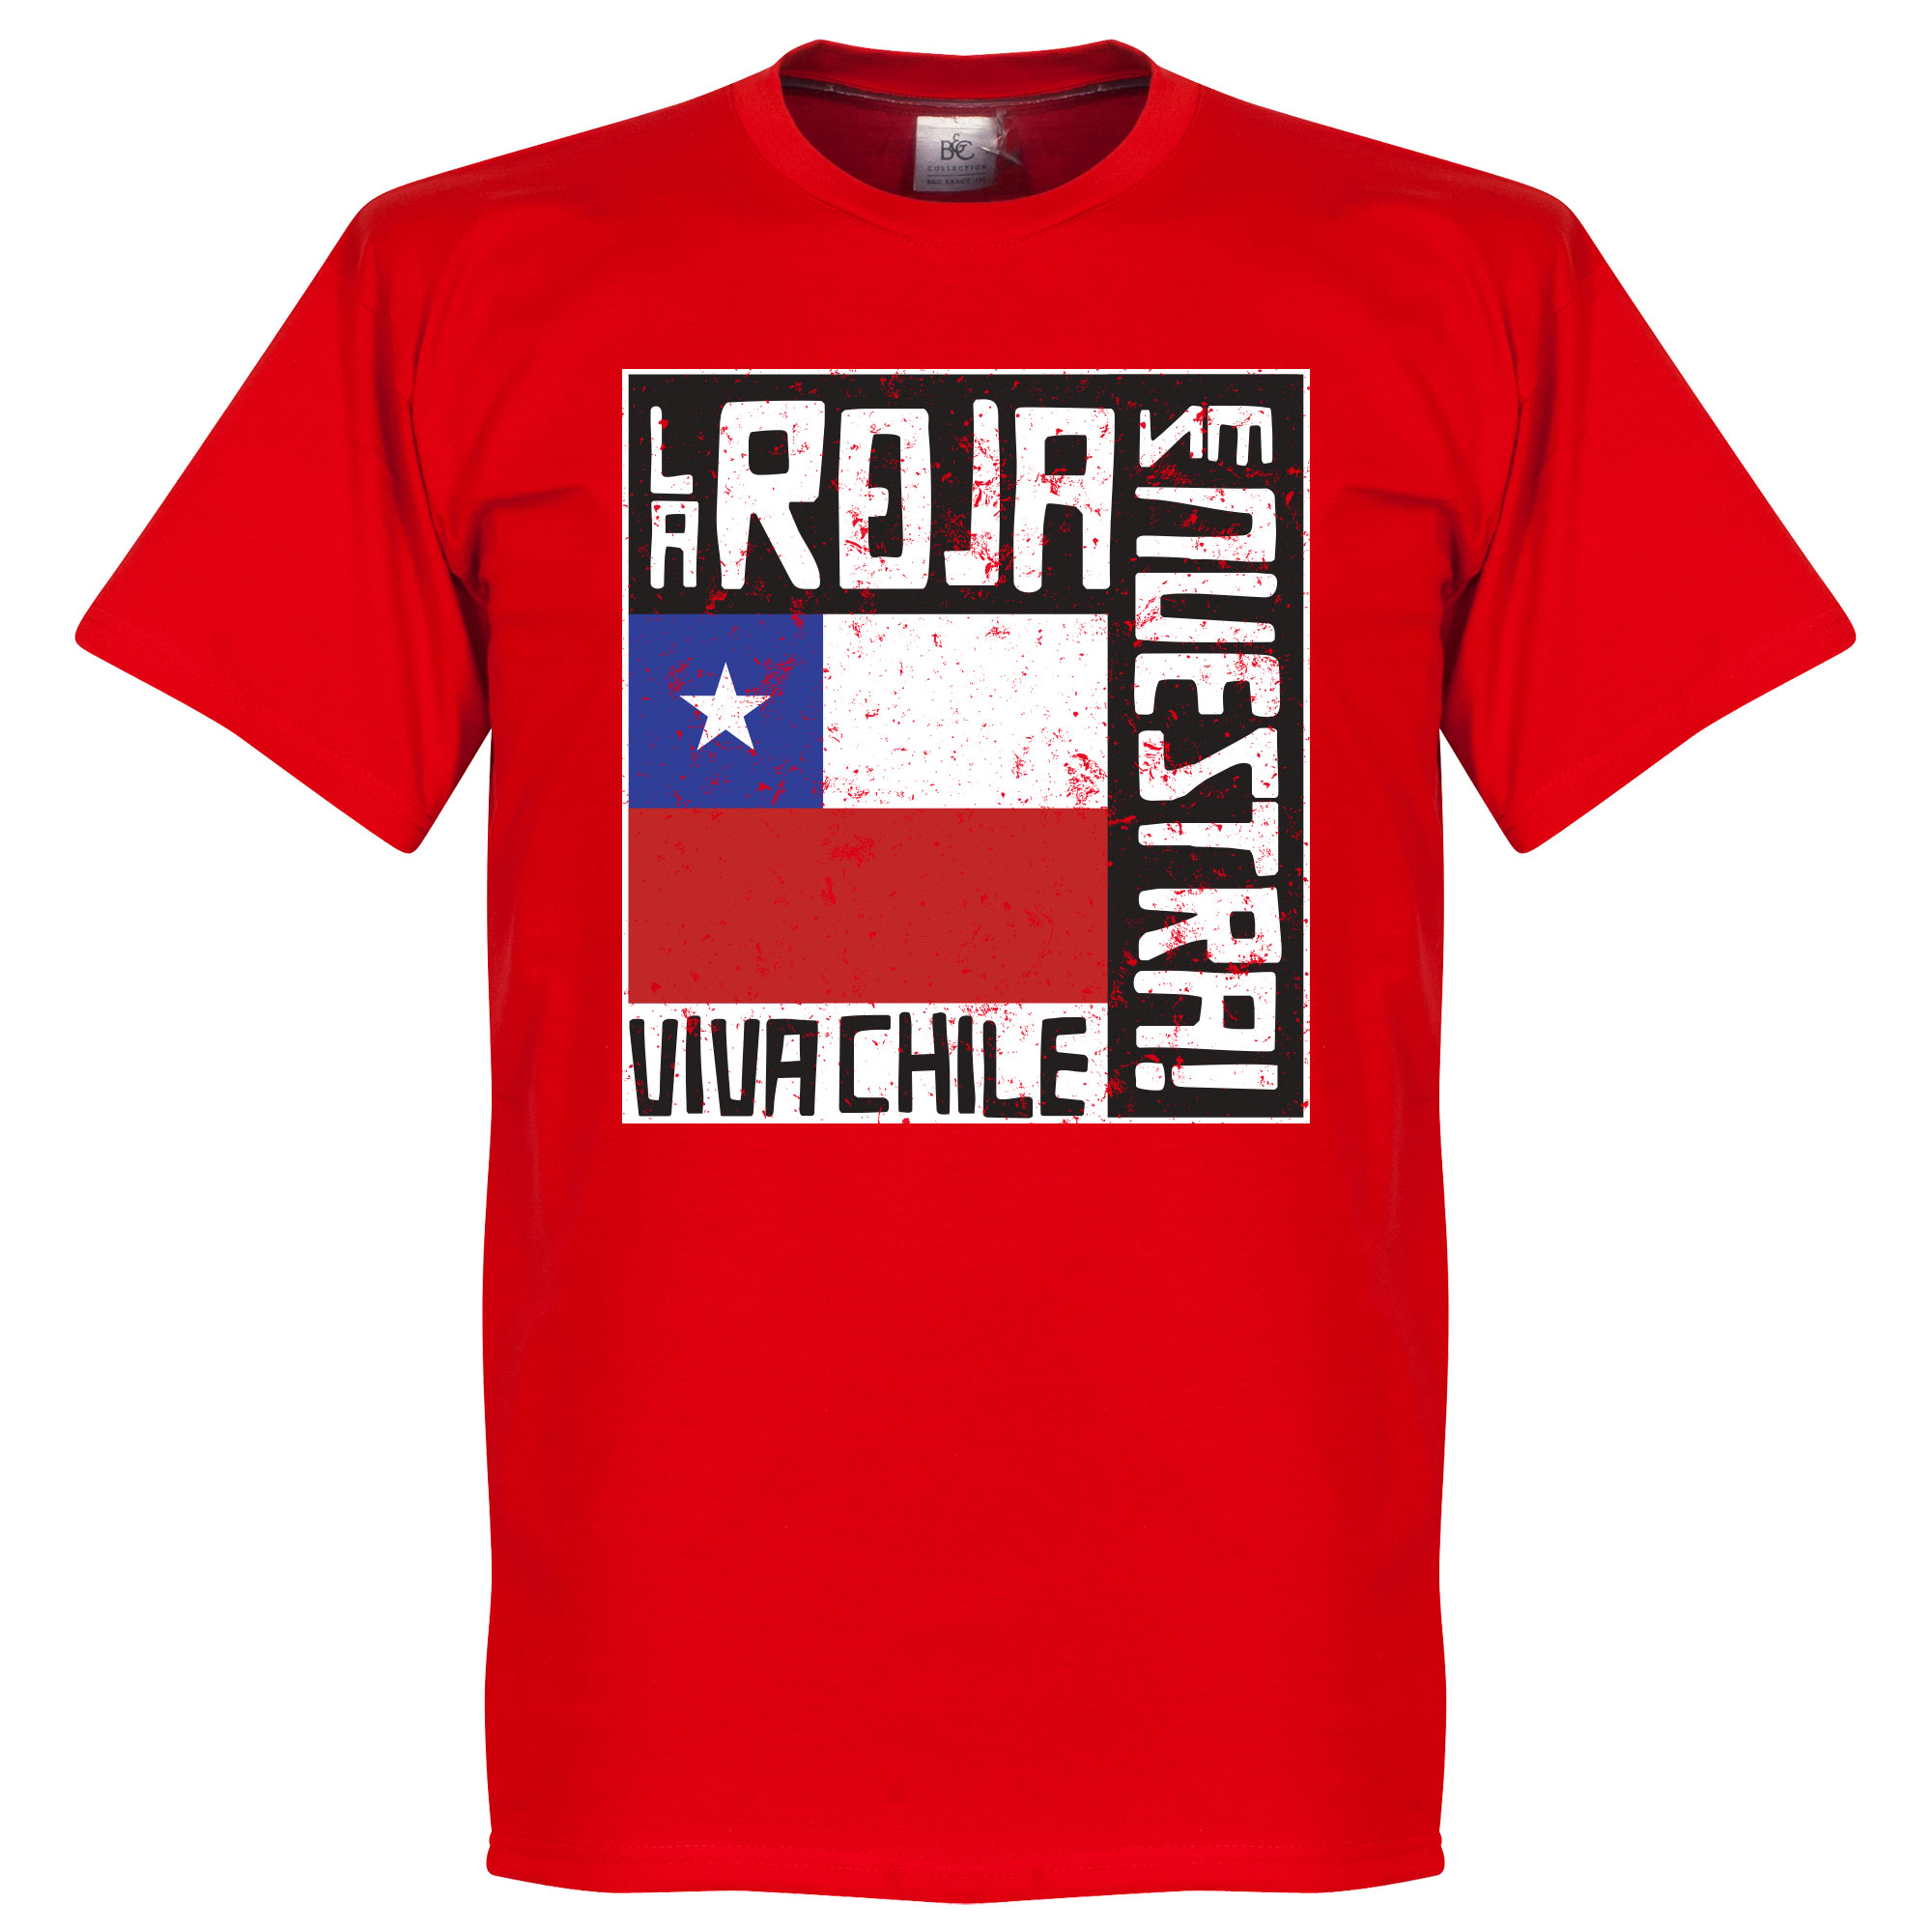 Chili Le Roja Es Nuestra T-Shirt Top Merken Winkel